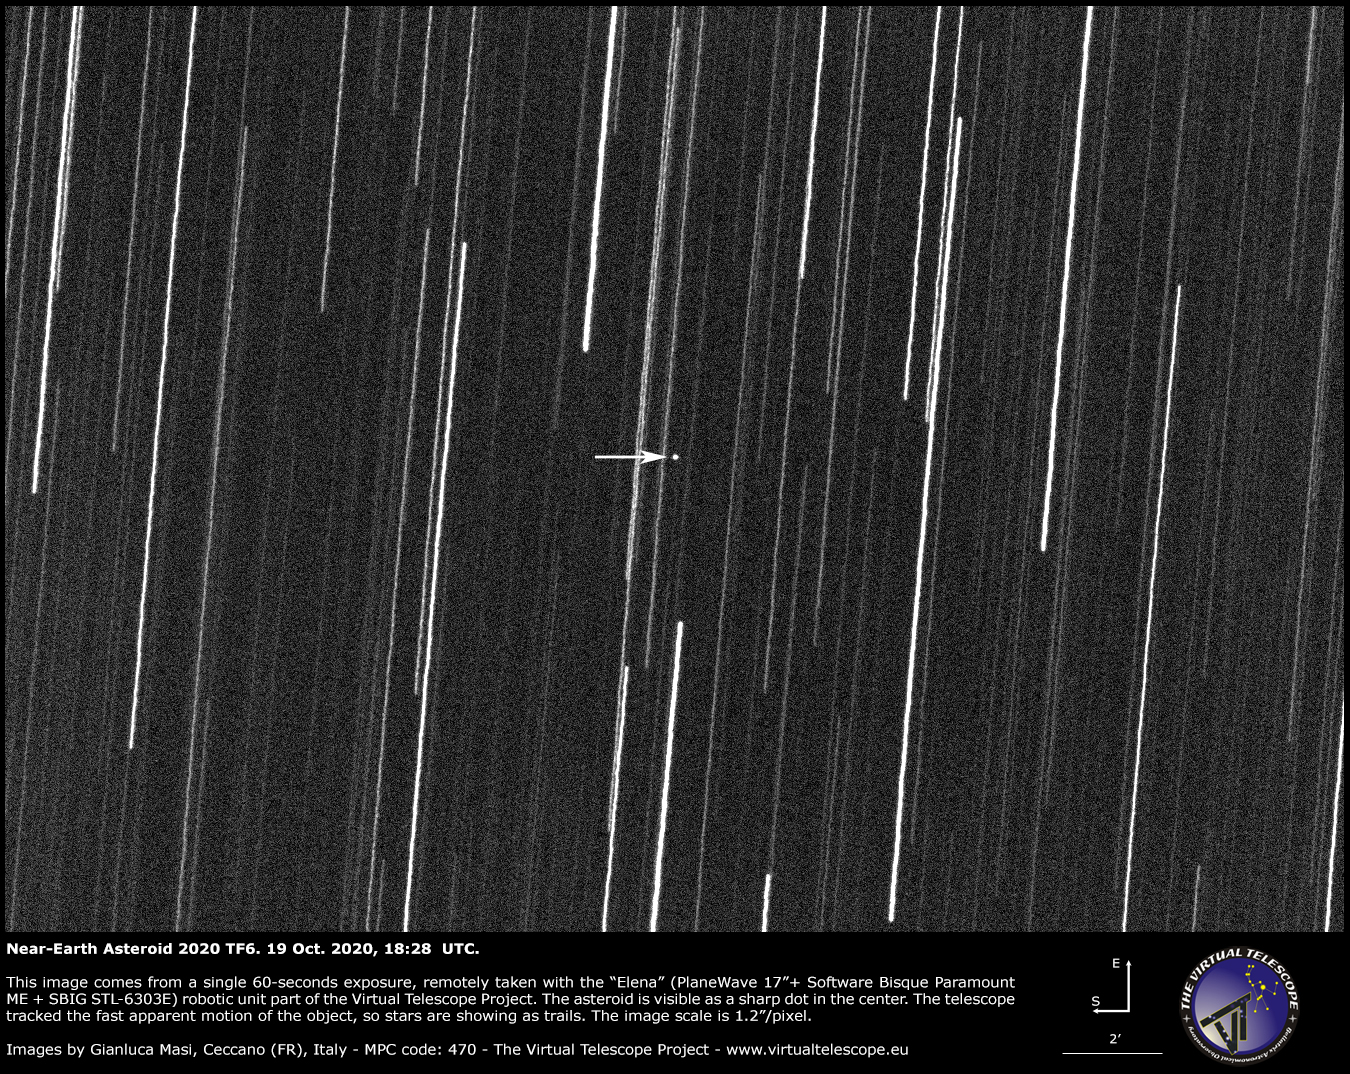 Near-Earth asteroid 2020 TF6. 19 Oct. 2020.